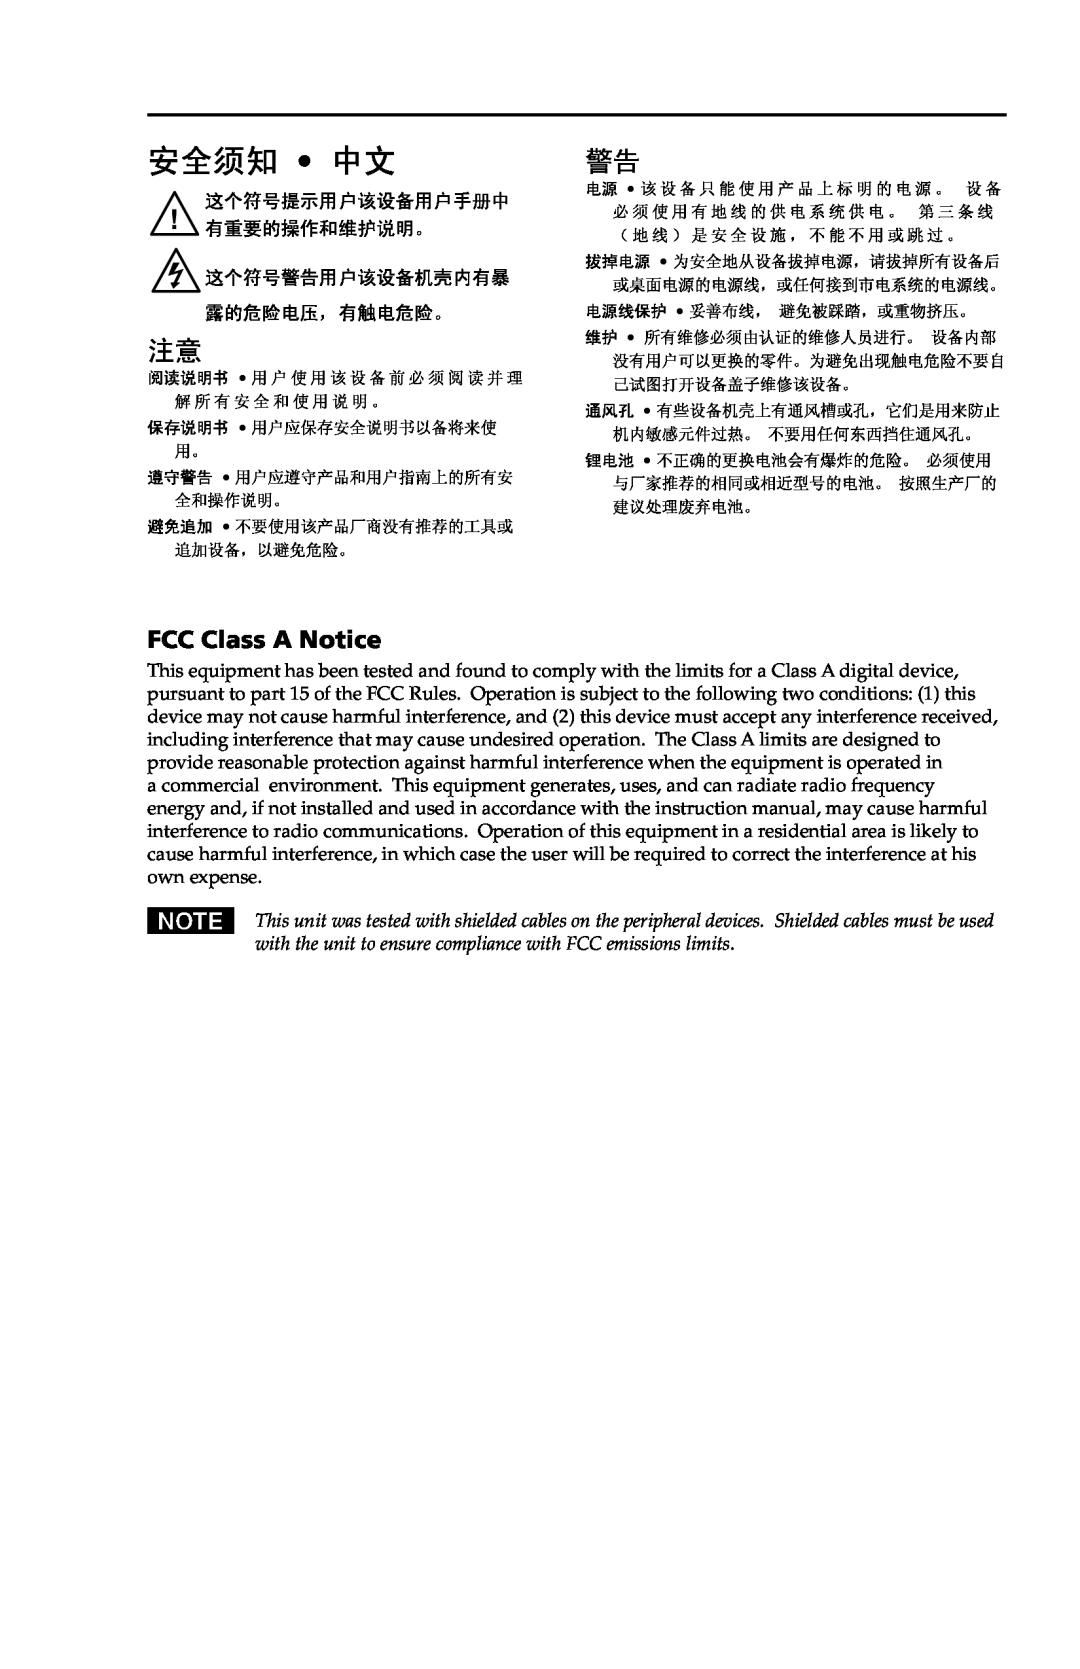 Extron electronic MAV setup guide FCC Class A Notice, 安全须知 中文 